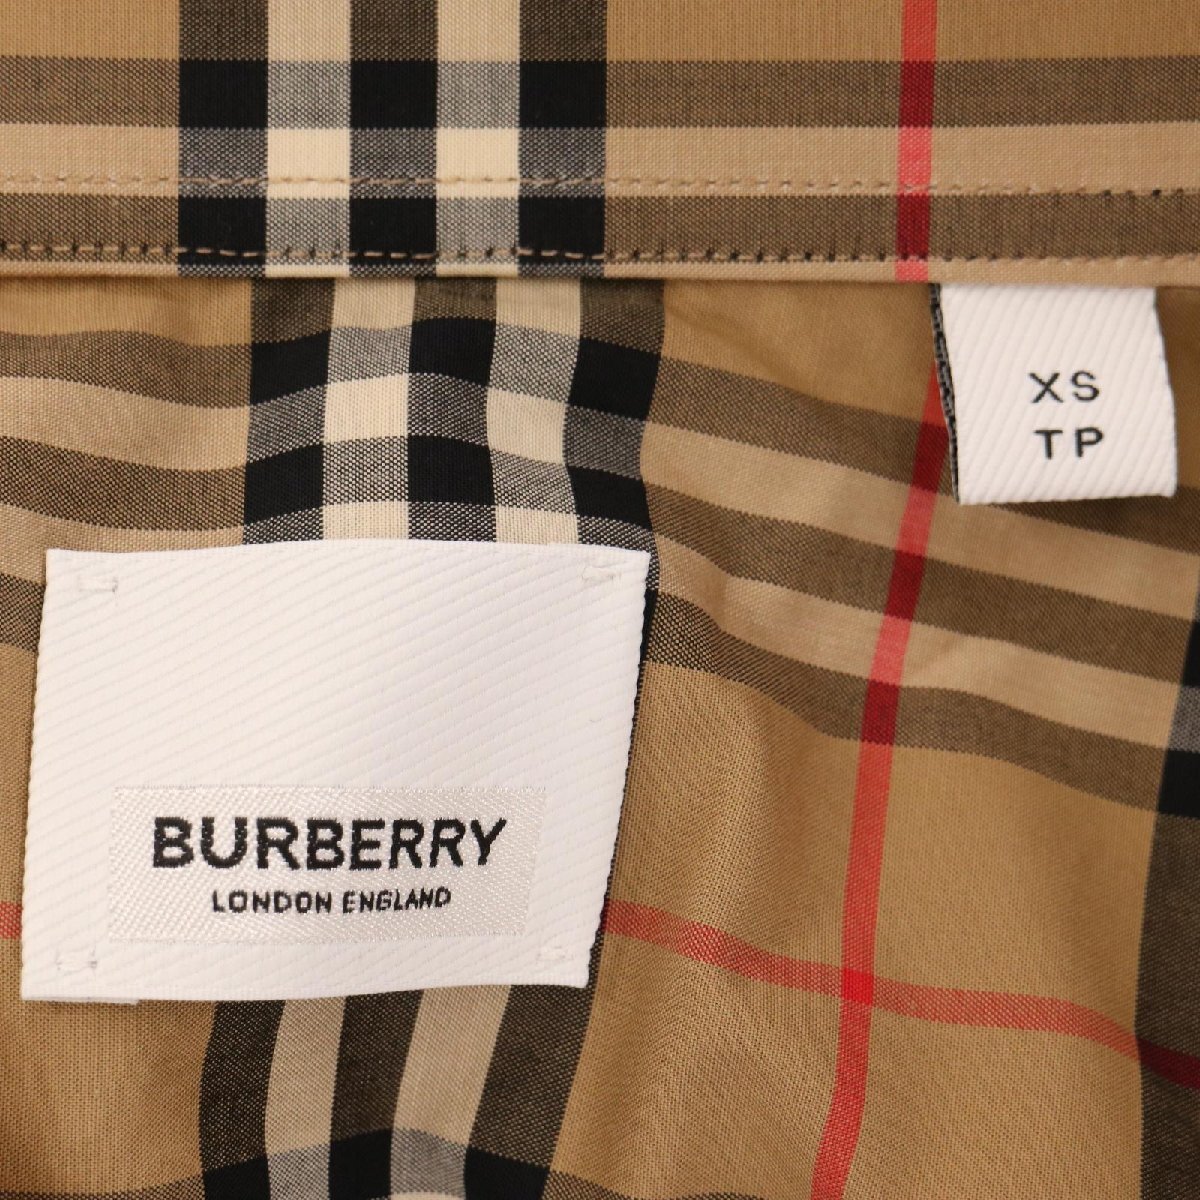 BURBERRY バーバリー ヴィンテージチェック 8020966 コットン ロングスリーブシャツ キャメル XS トップス コットン メンズ 中古_画像8